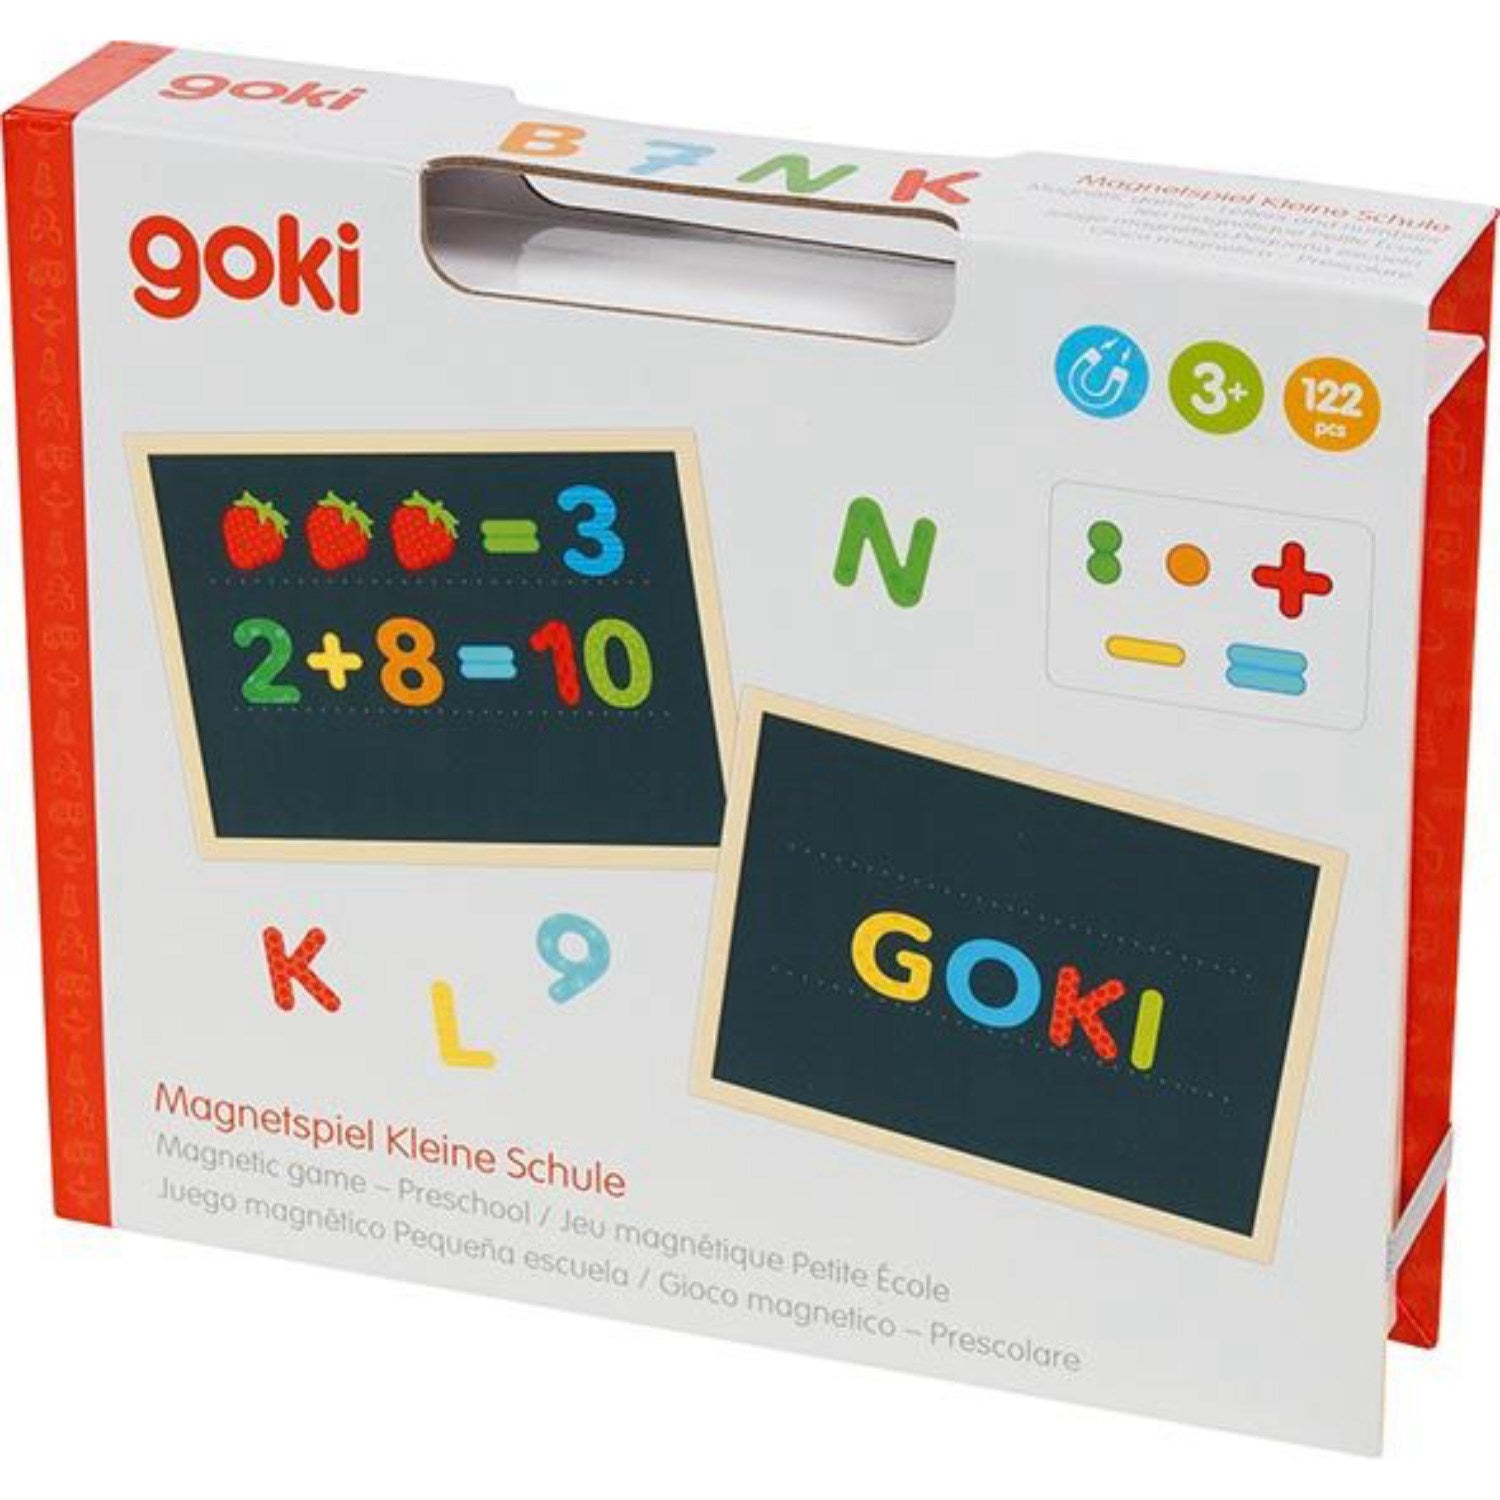 Goki multicolor Magnetic Game Preschool 2